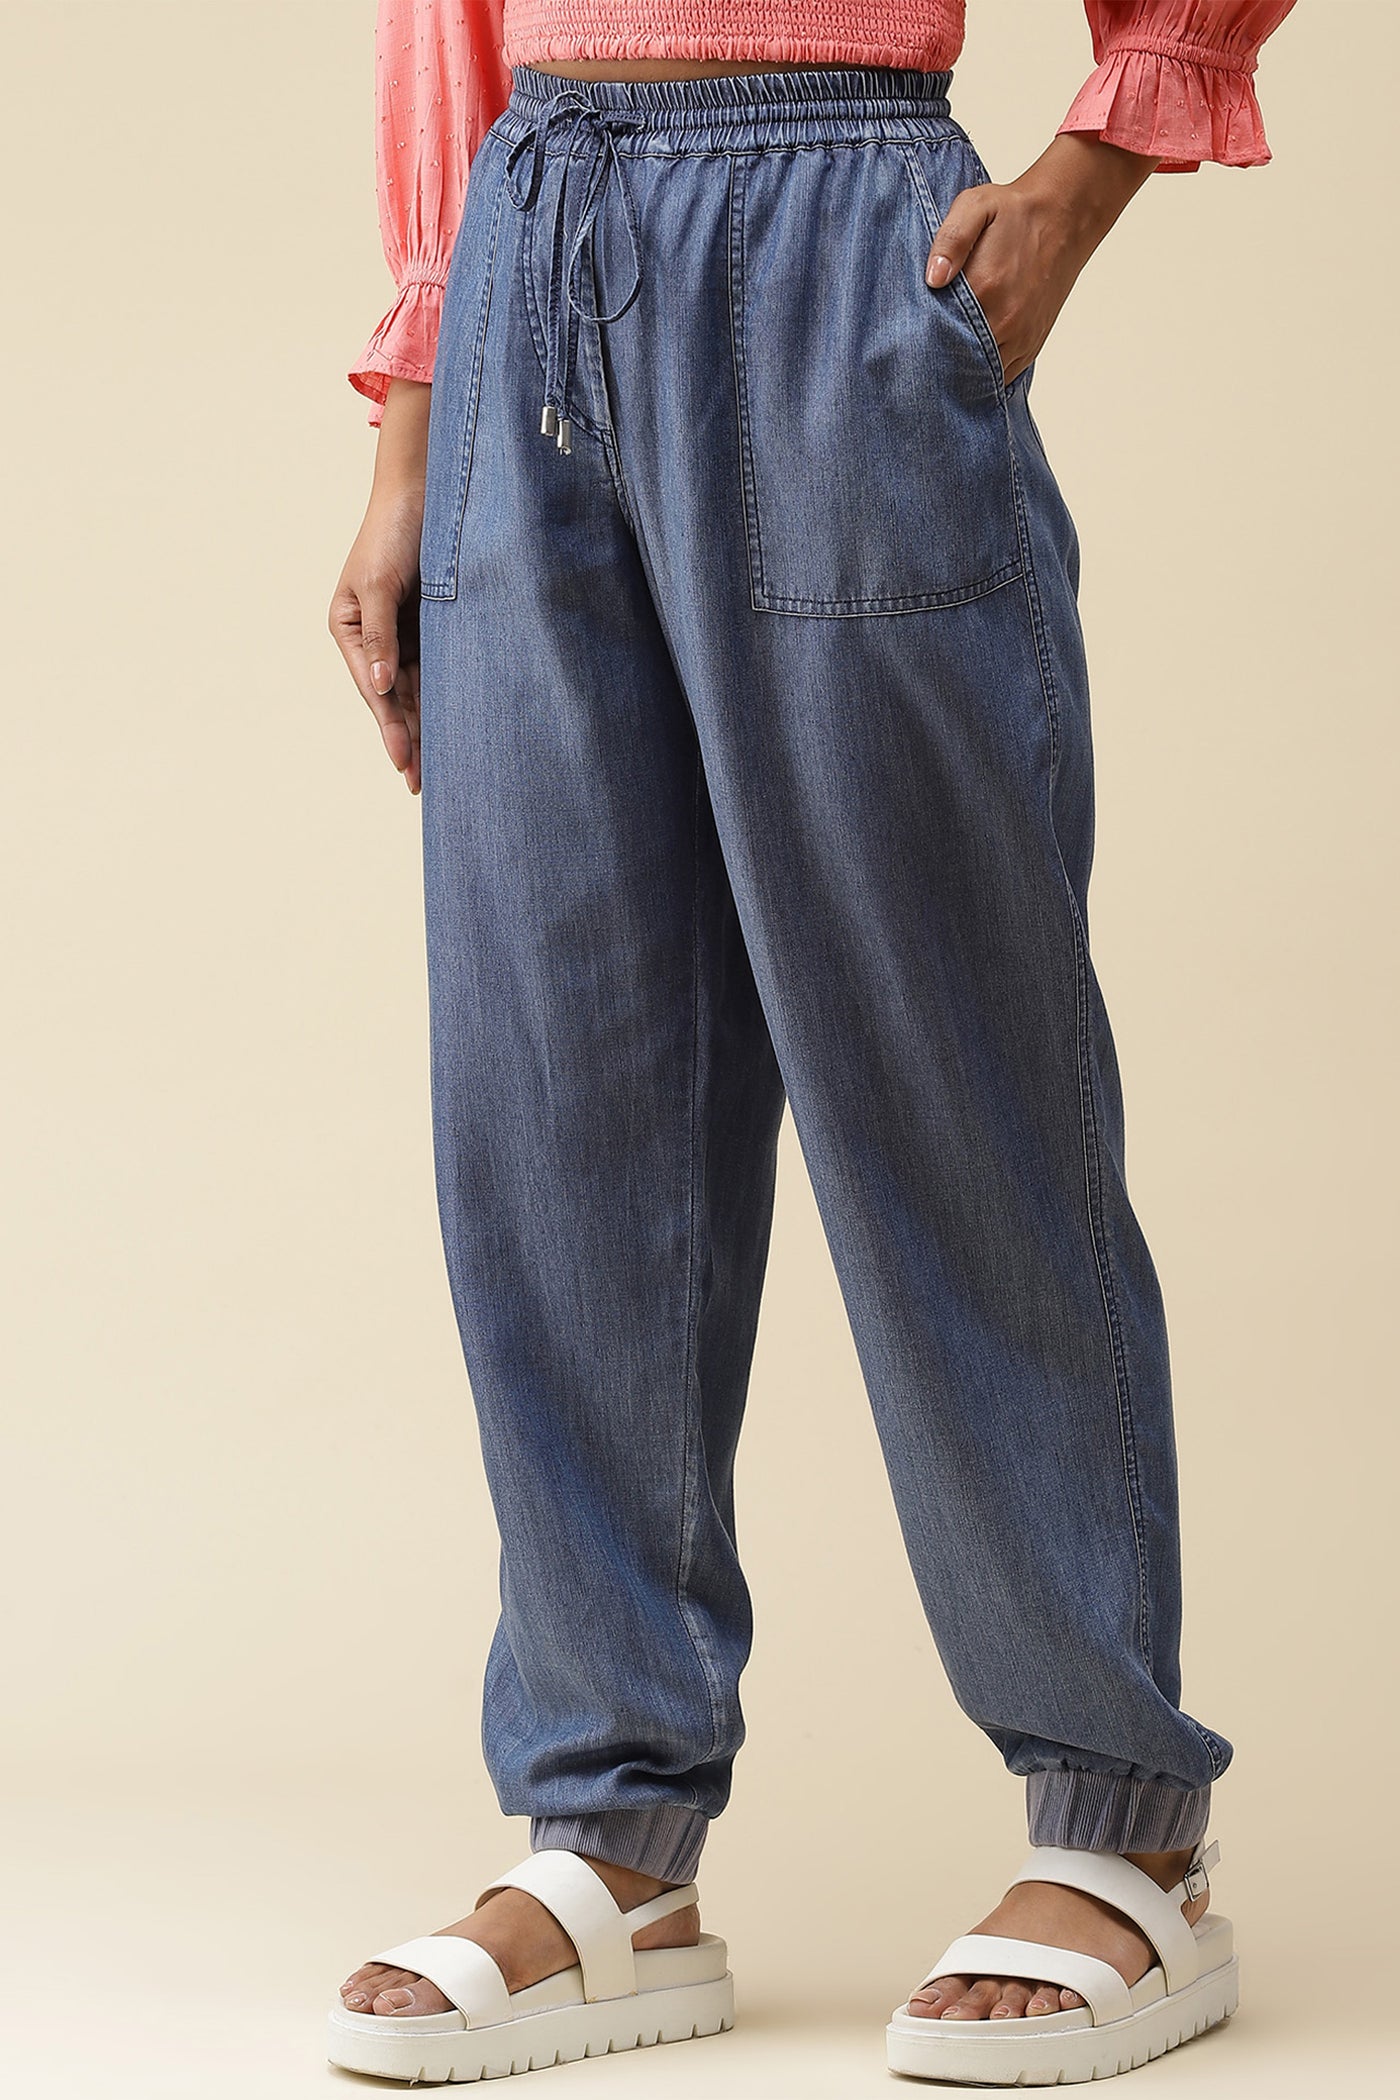 label ritu kumar Blue Denim Joggers Pants western  designer wear online shopping melange singapore